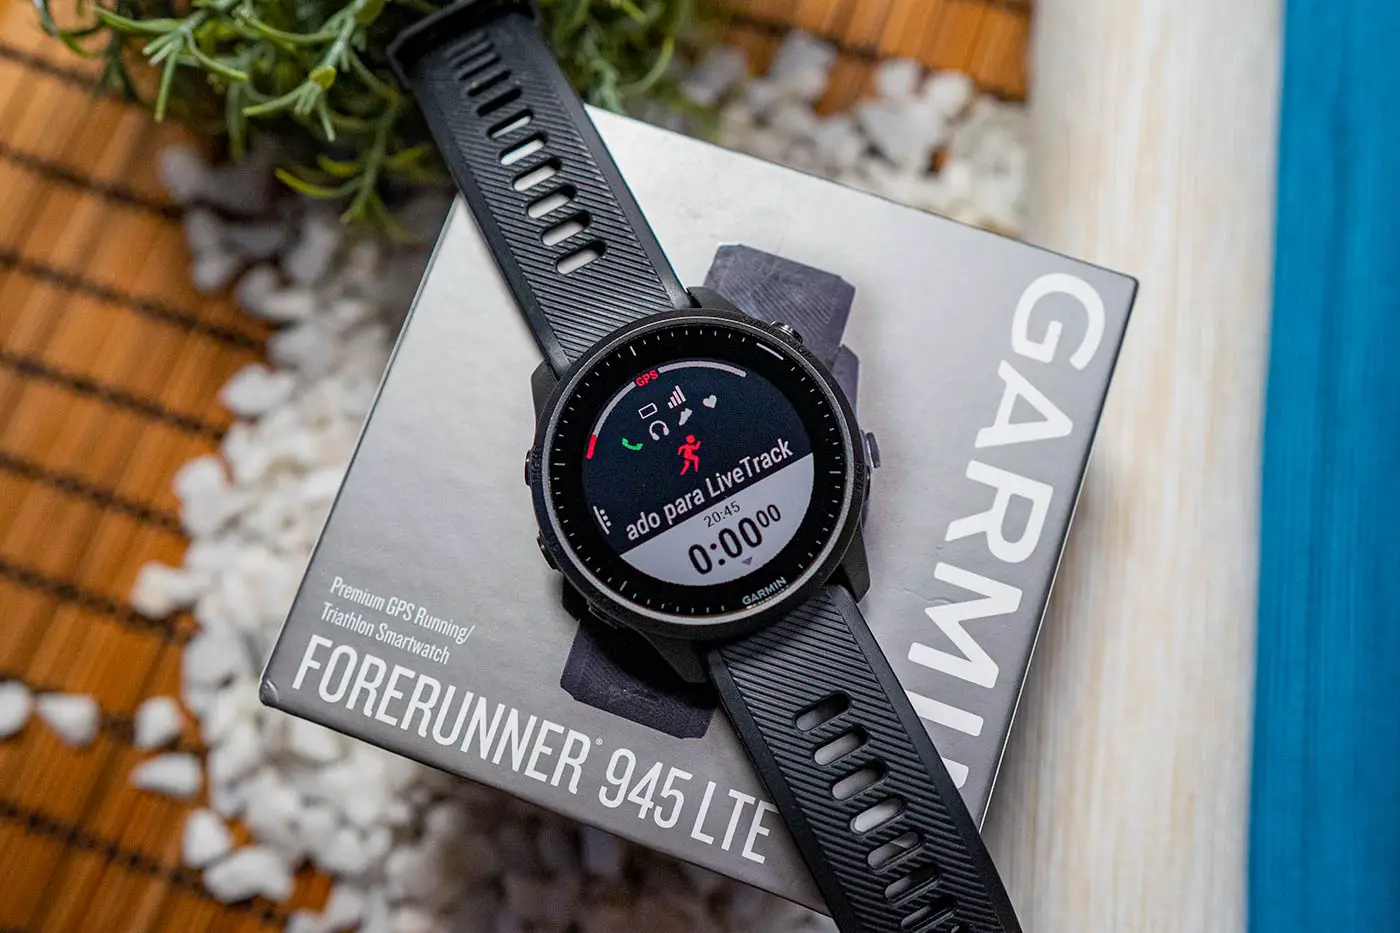 Garmin Forerunner 945 reloj inteligente de alta calidad con GPS